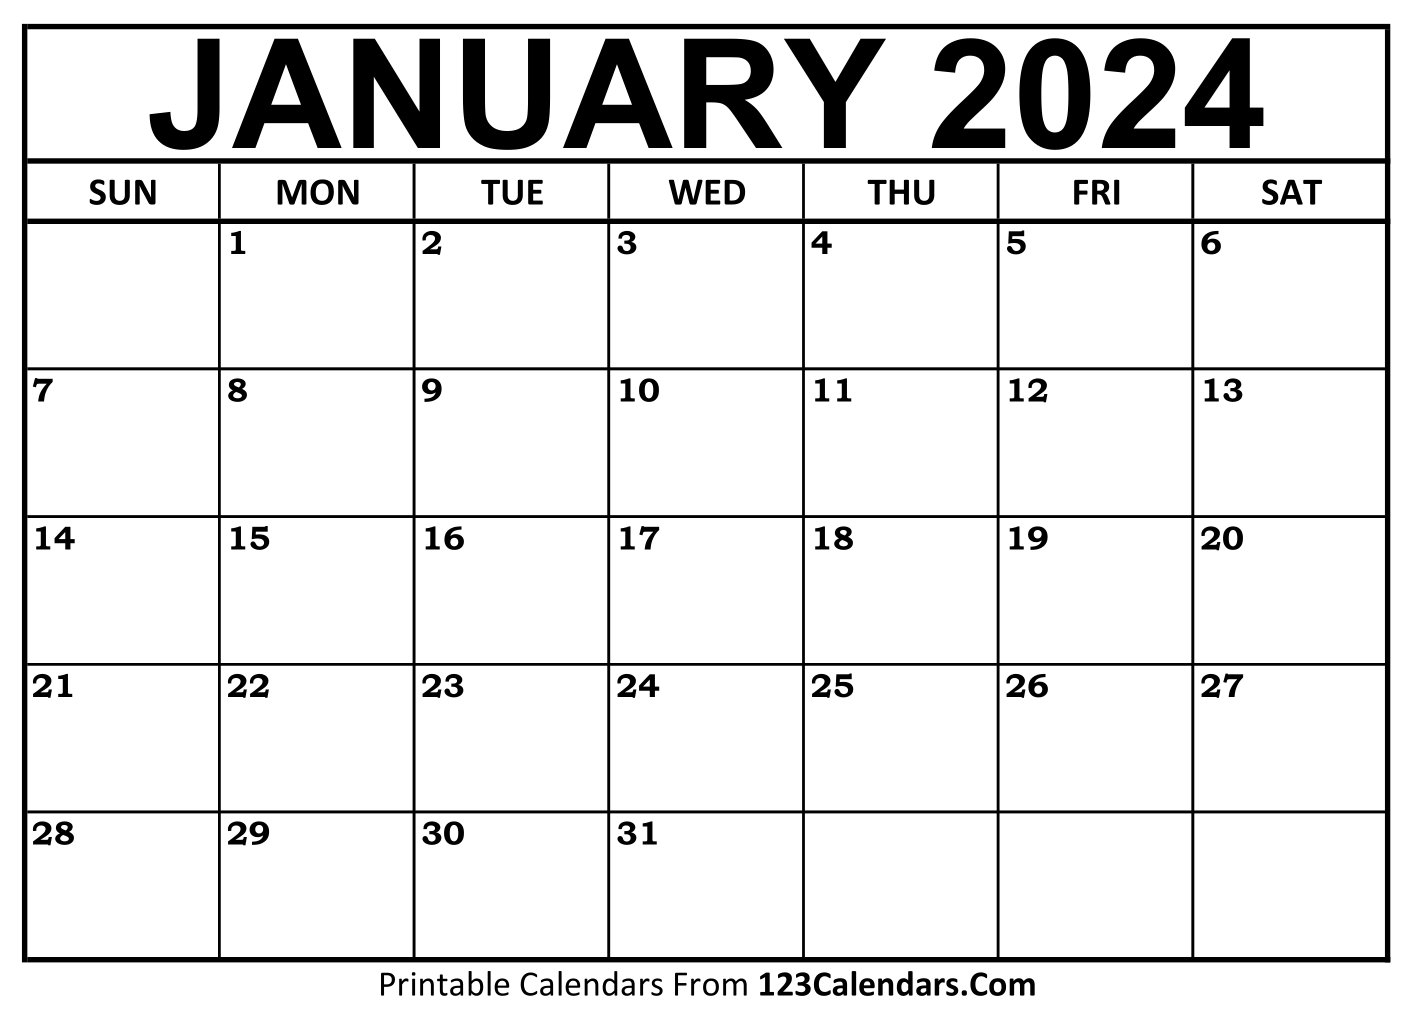 Printable January 2024 Calendar Templates - 123Calendars for Free Printable Monthly January 2024 Calendar